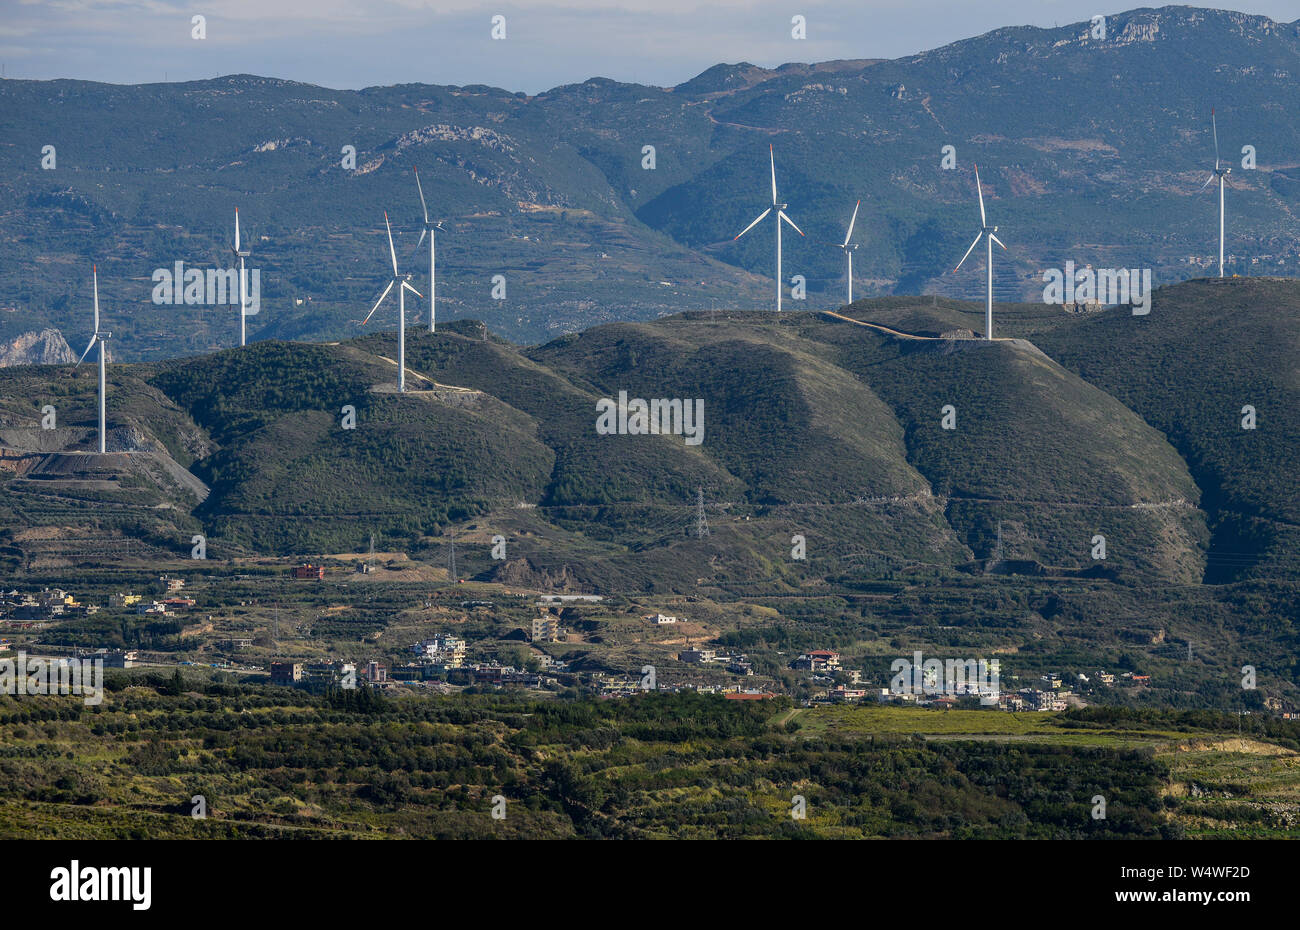 La Turquie, Samandag près d'Antakya, 35 MW avec éoliennes Nordex / TUERKEI, Samandag bei Antakya, 35 MW Windpark, Nordex Windkraftanlagen Oronte im Tal Banque D'Images